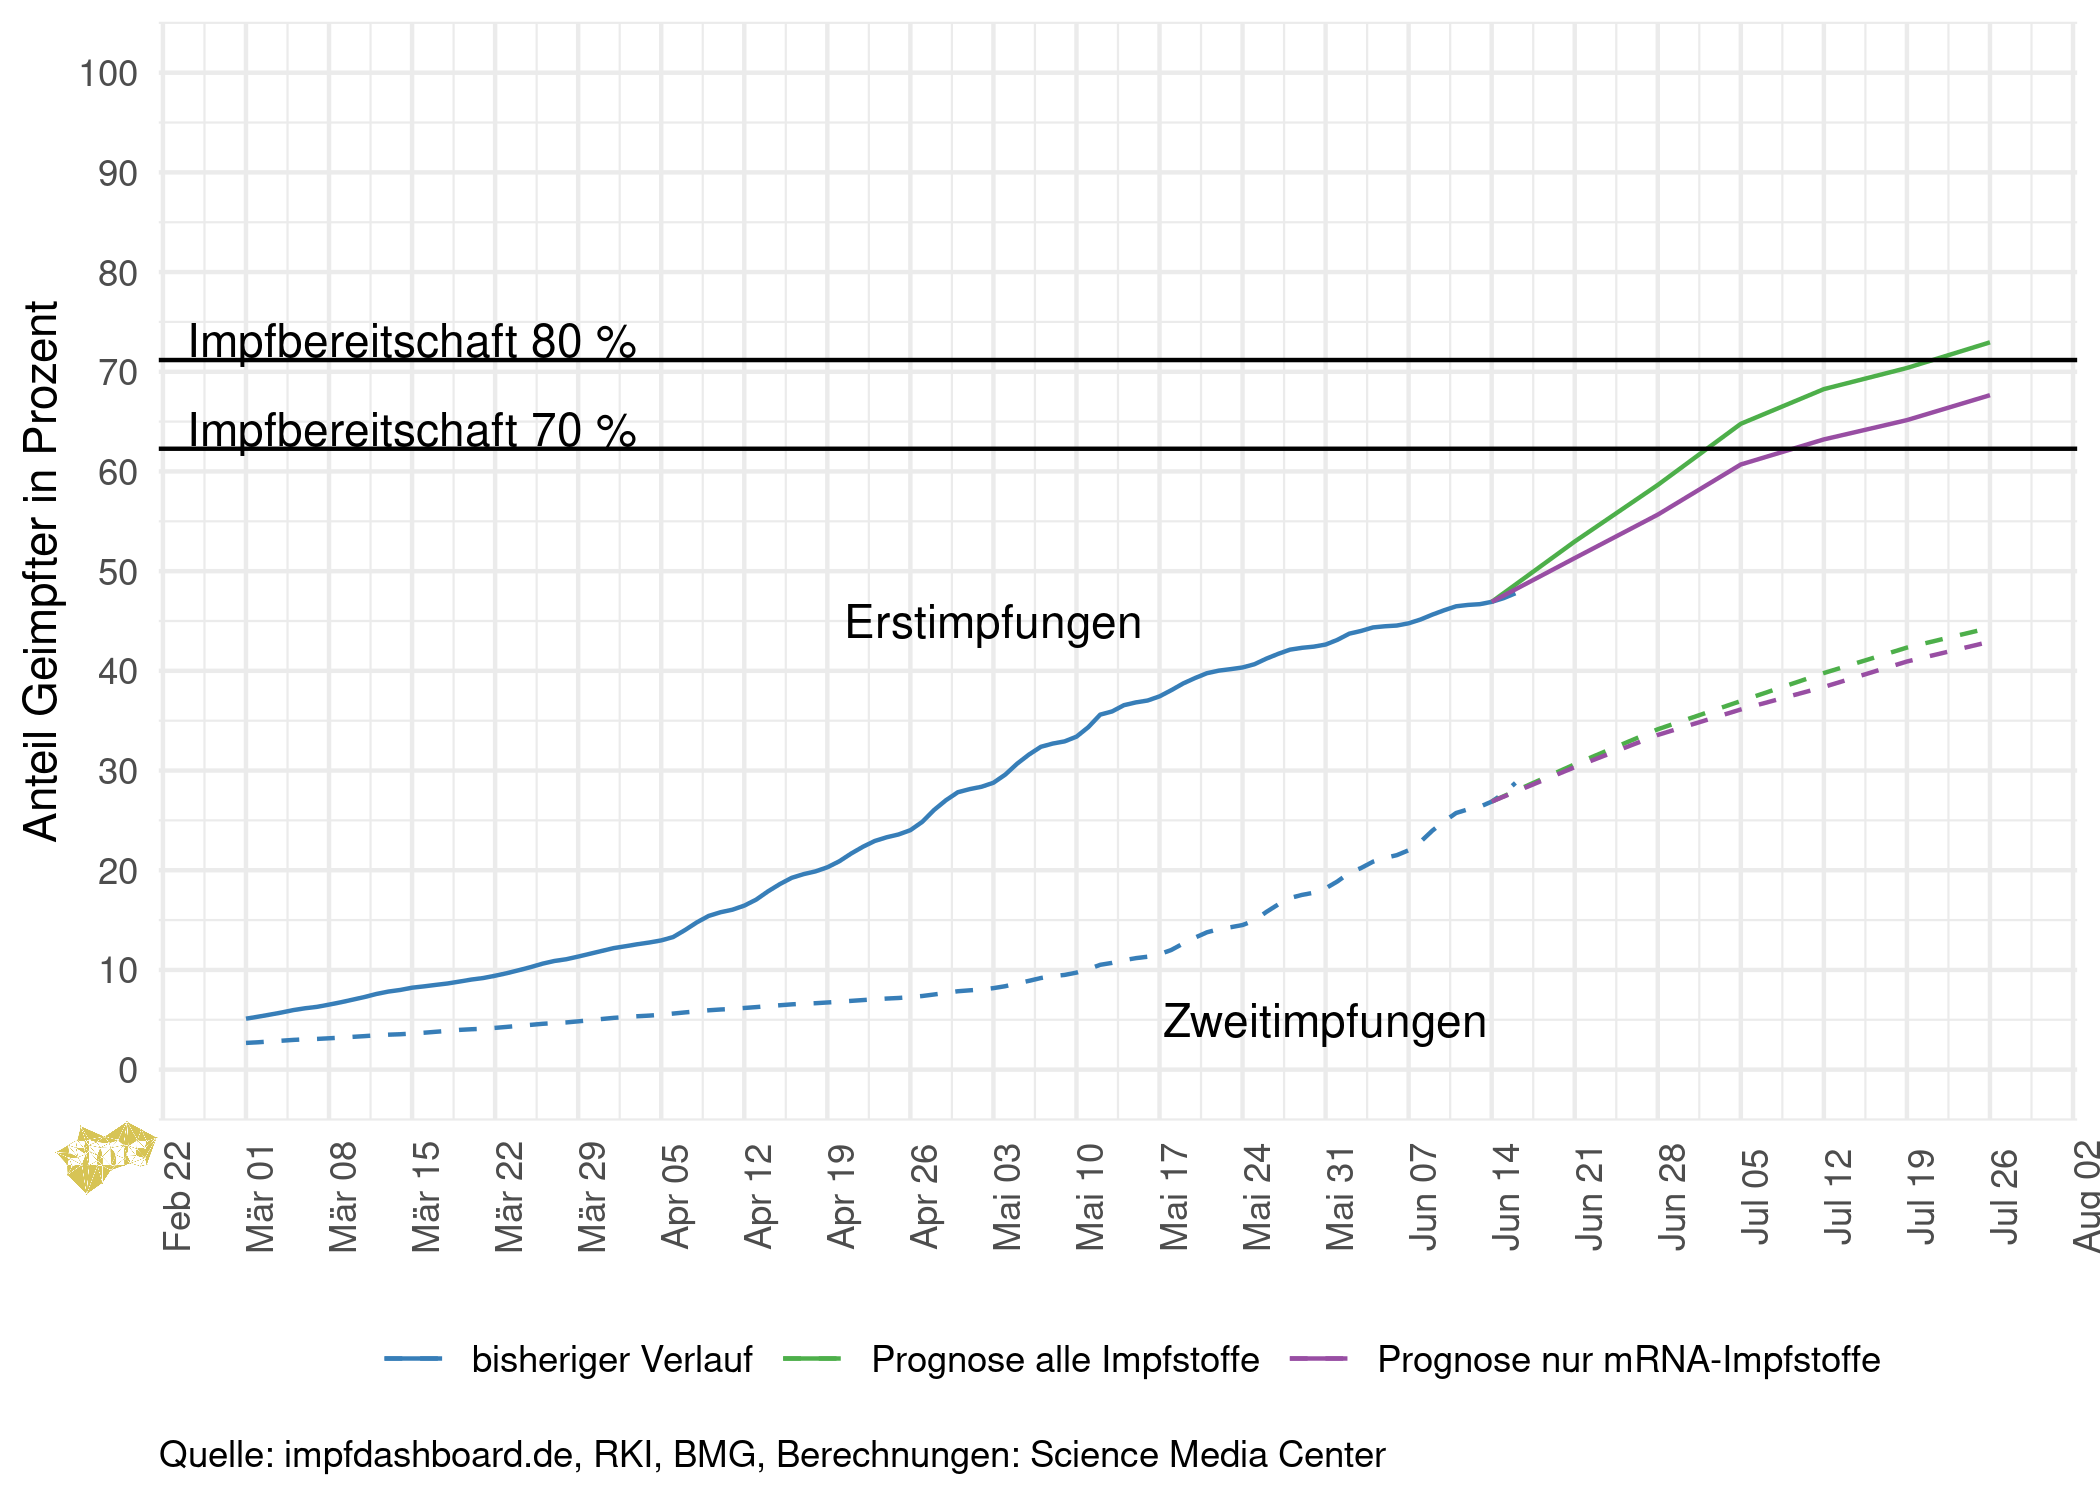 2021-06-17_Impfungen_Prognosen.png